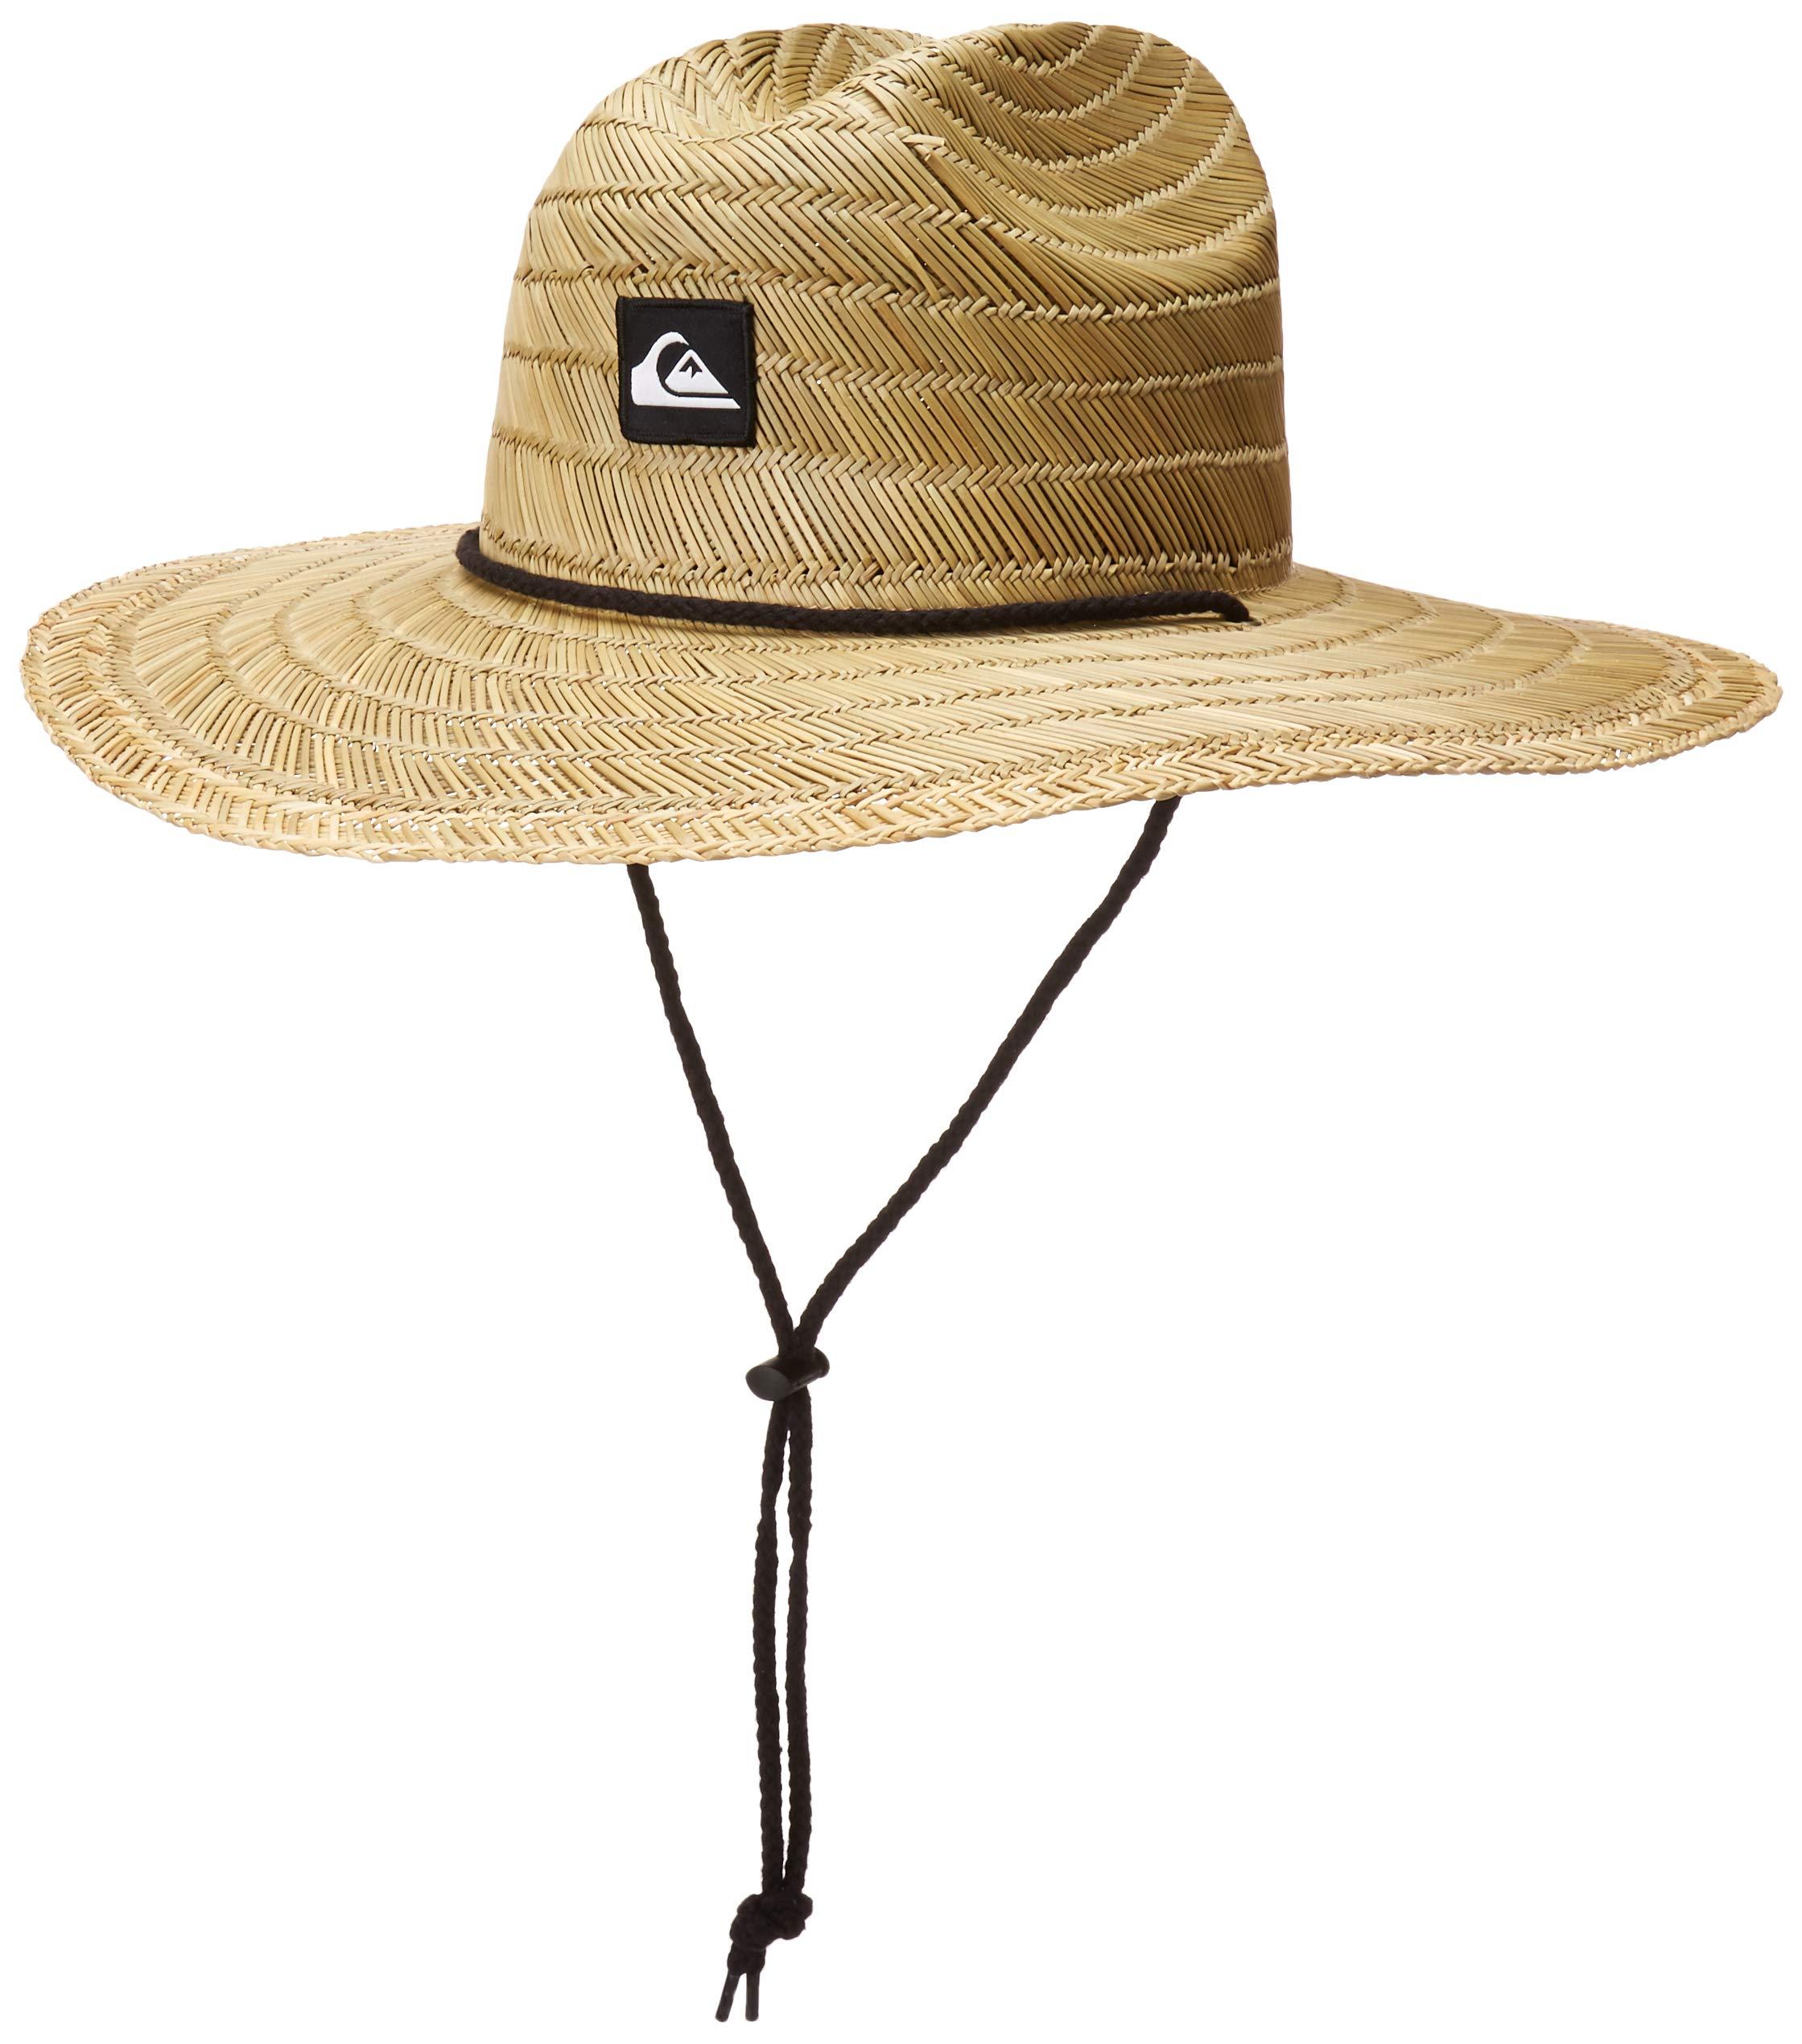 Quiksilver Pierside Straw Hat in Natural/Black (Natural) for Men - Lyst